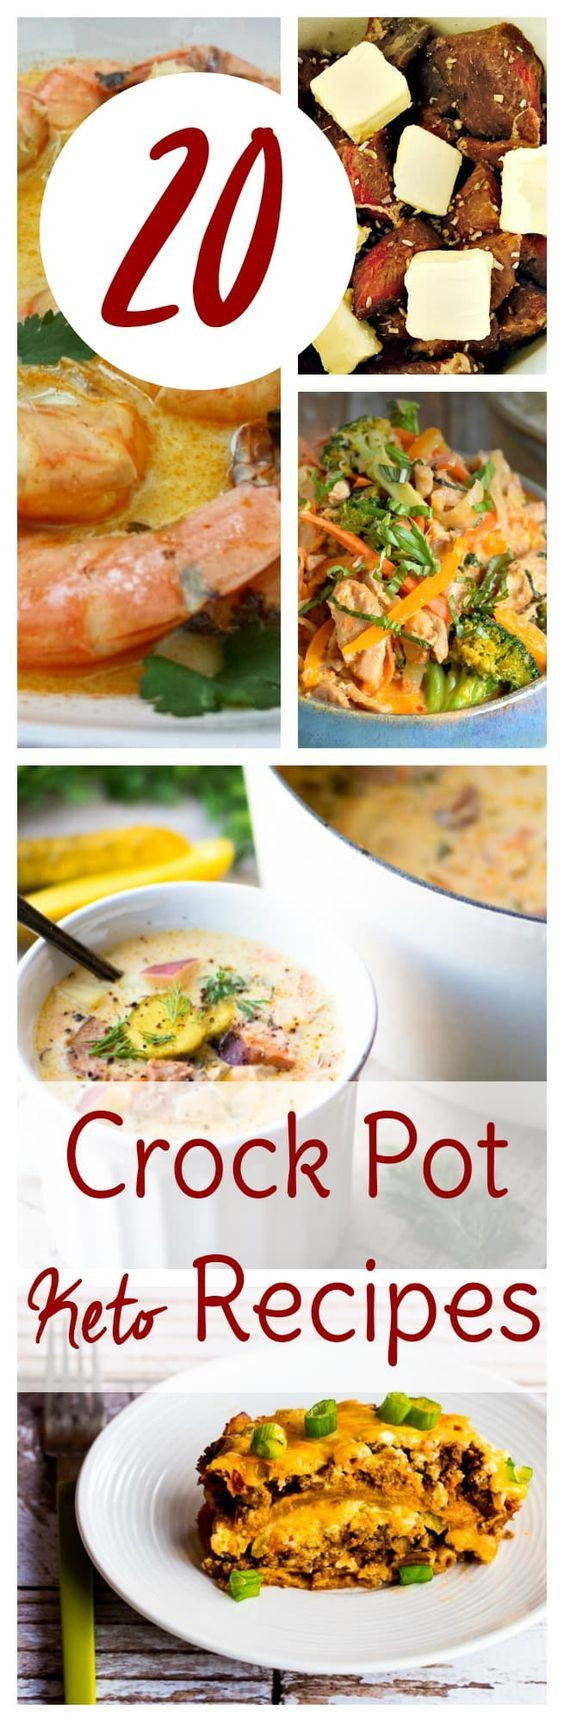 Diabetic Crock Pot Recipes Low Carb
 Best 25 Ketogenic cookbook ideas on Pinterest